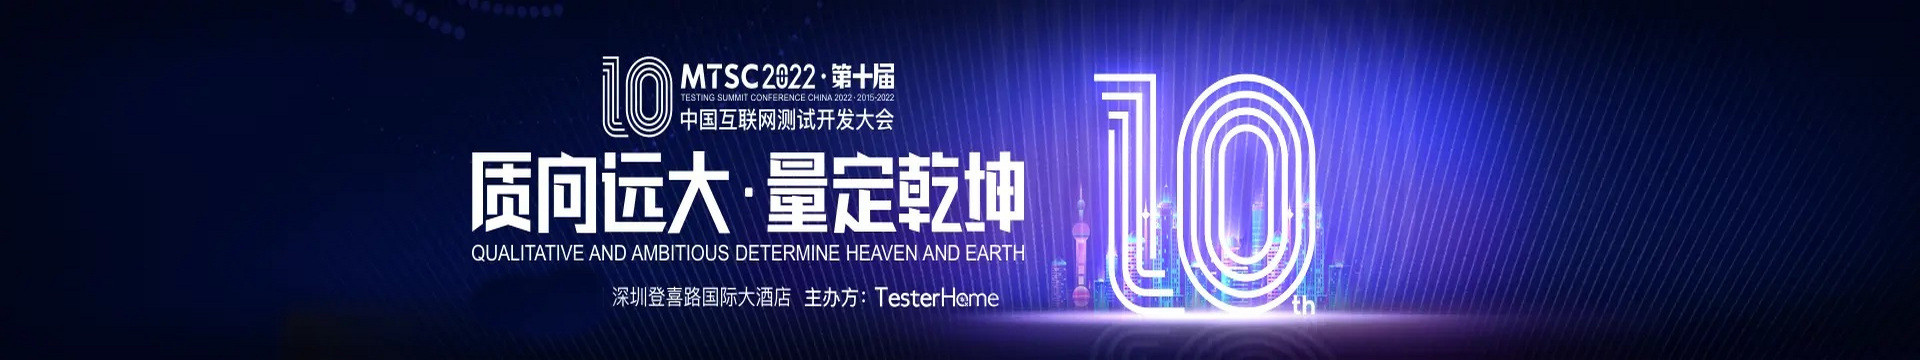 MTSC2022中国互联网测试开发大会.-深圳站